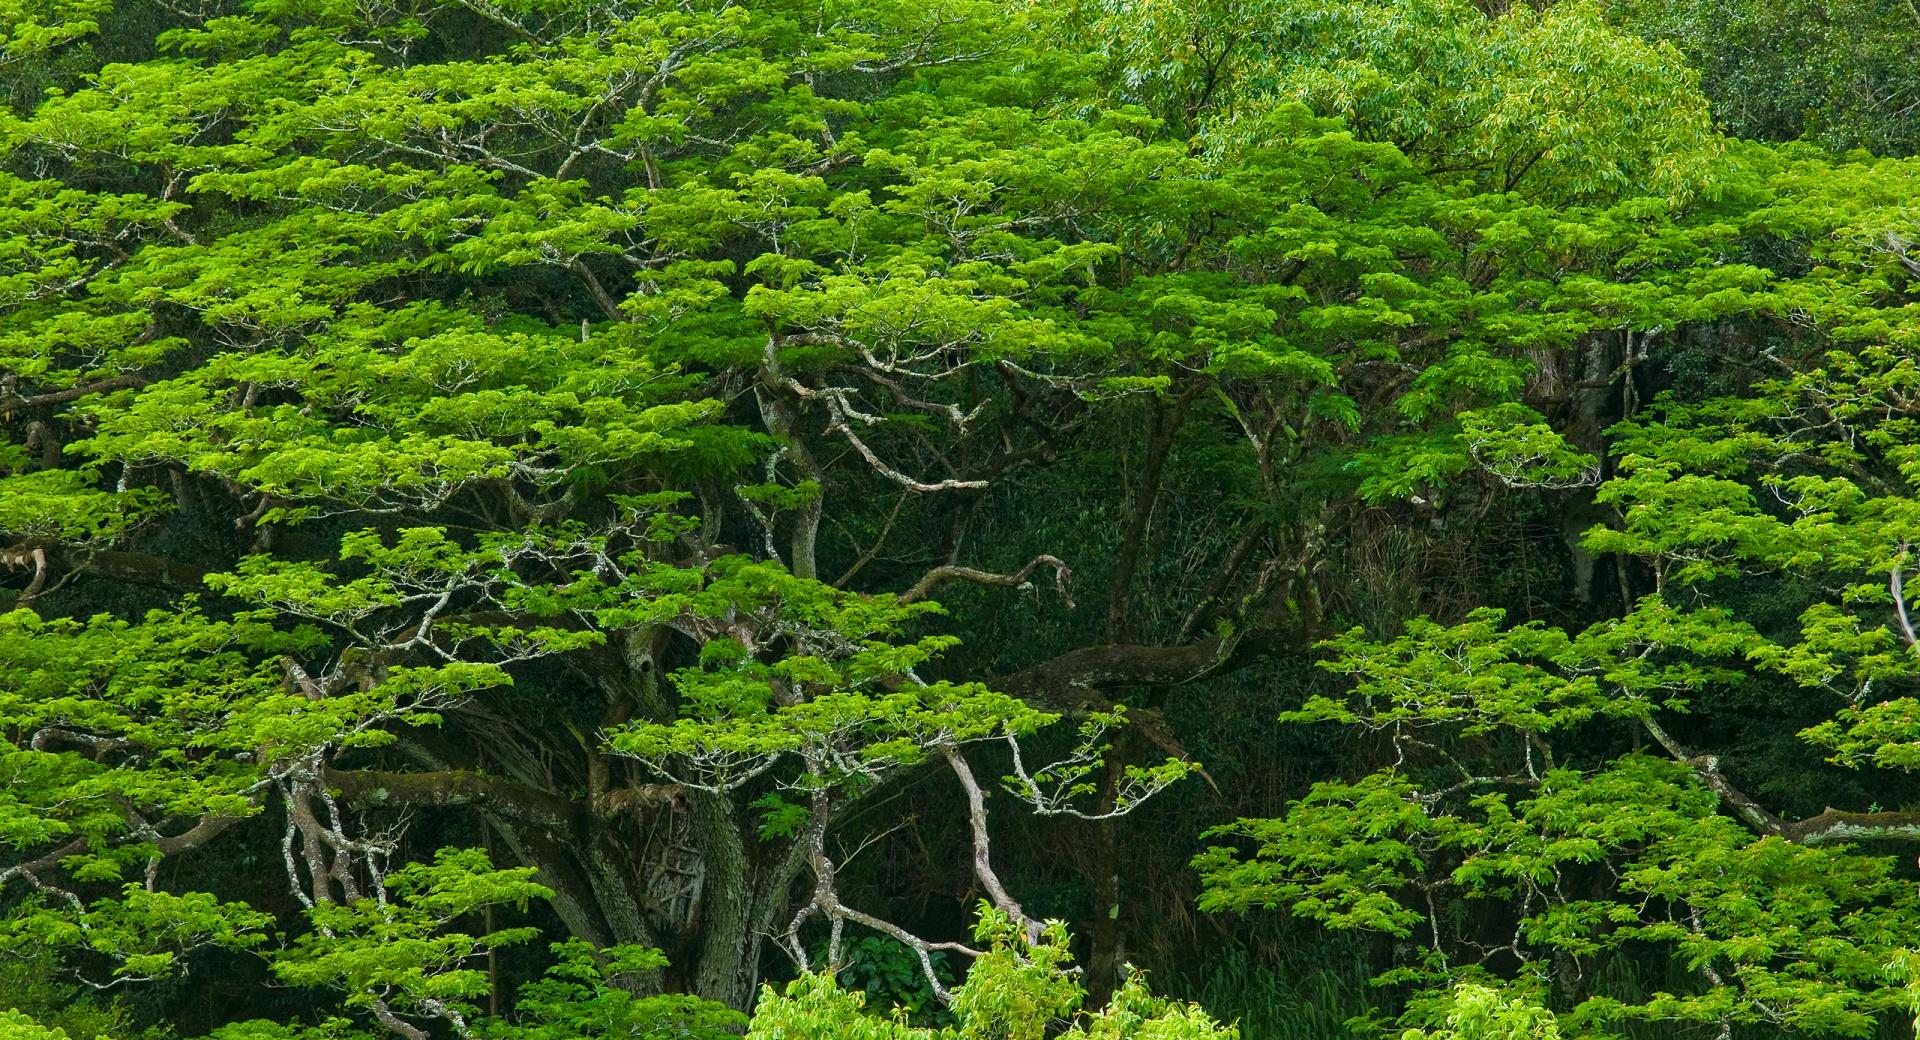 Amazing Trees, Waimea Valley, Hawaii at 1024 x 1024 iPad size wallpapers HD quality